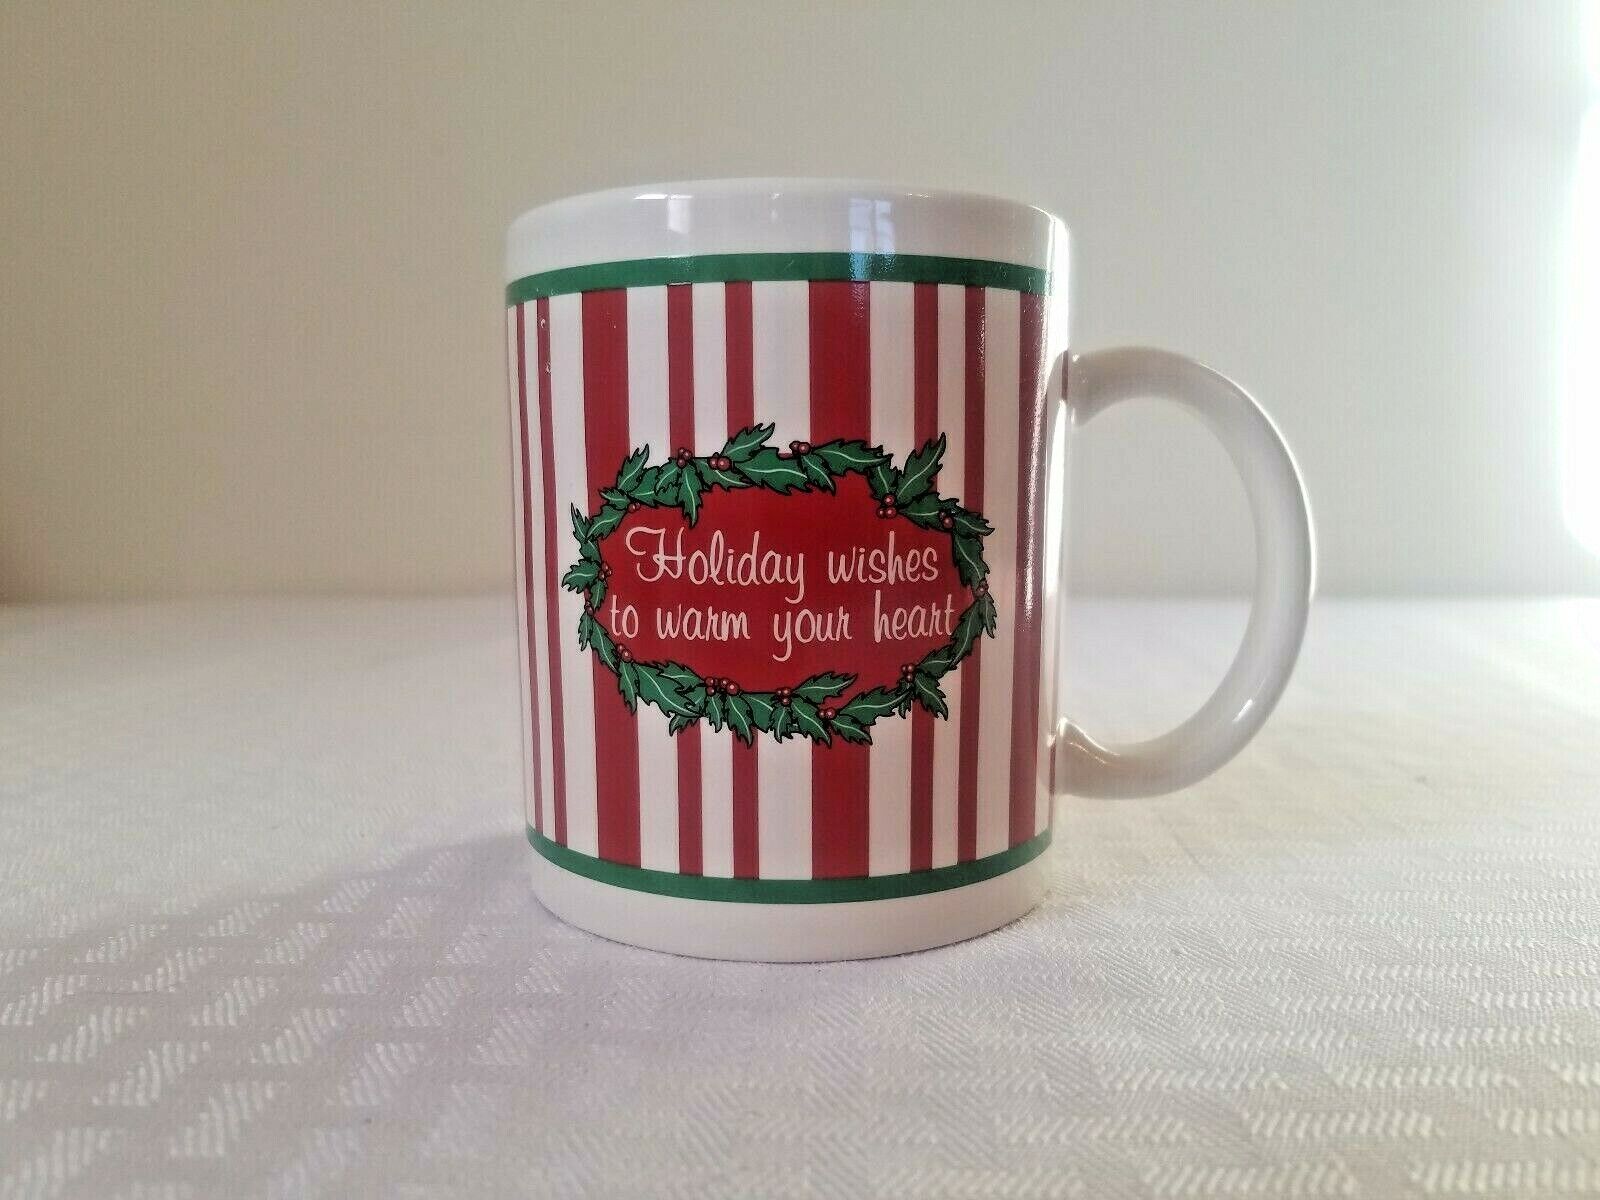 Christmas holidays wishes full of cheer mug Houston harvest 393FY07 